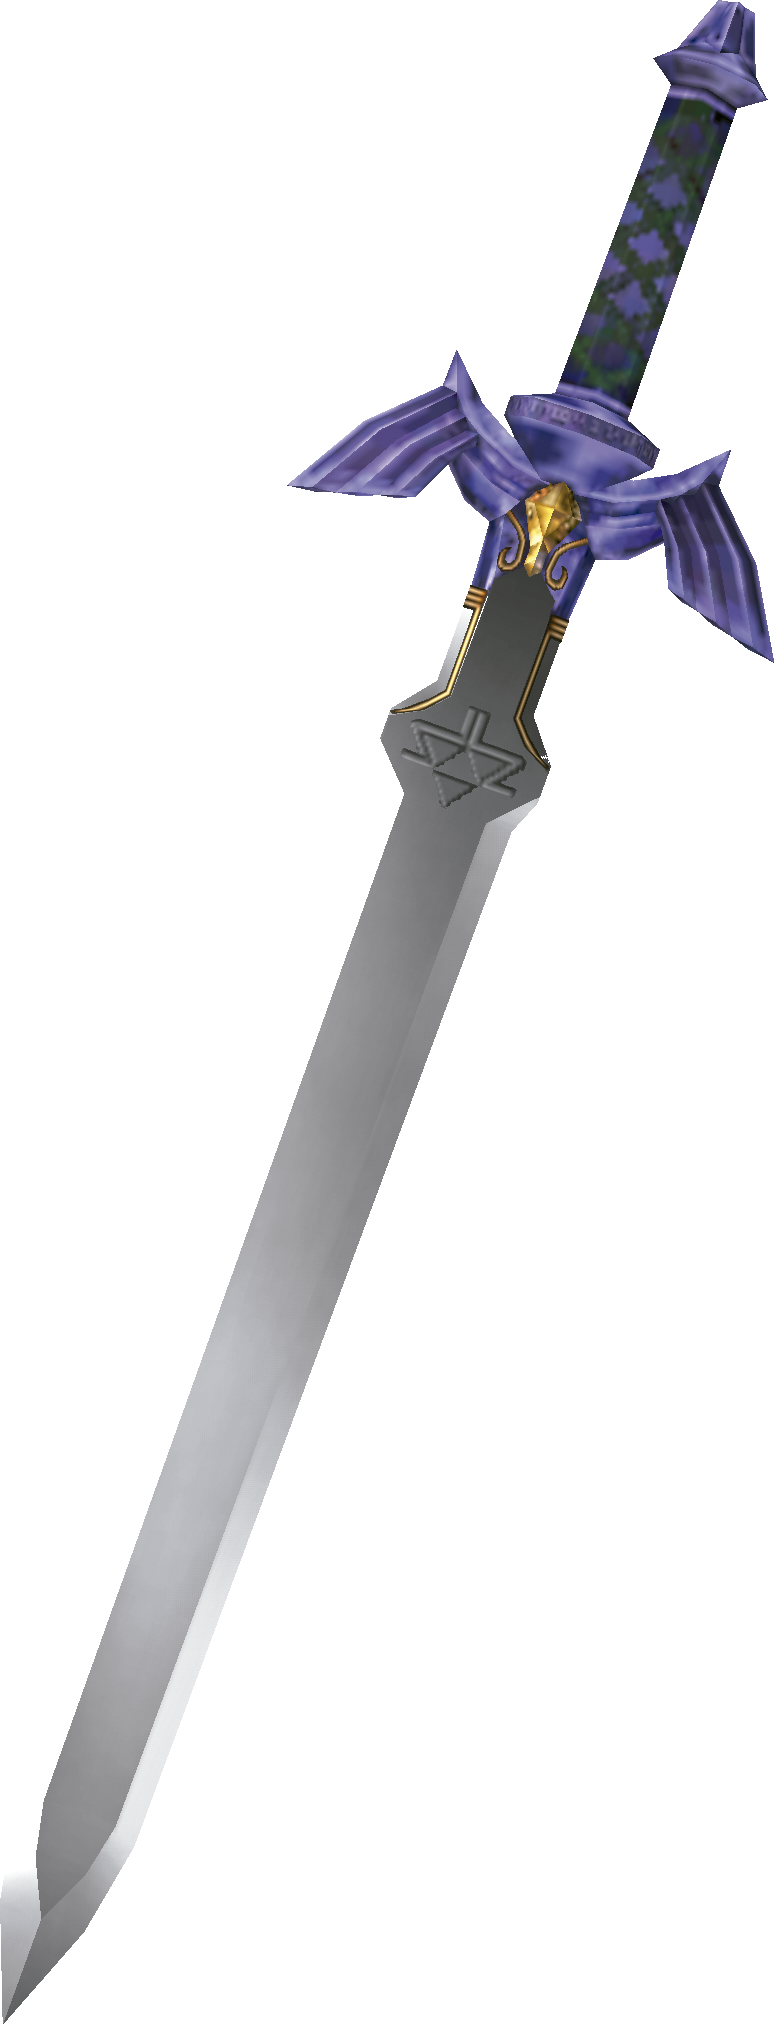 Master Sword - Wikipedia